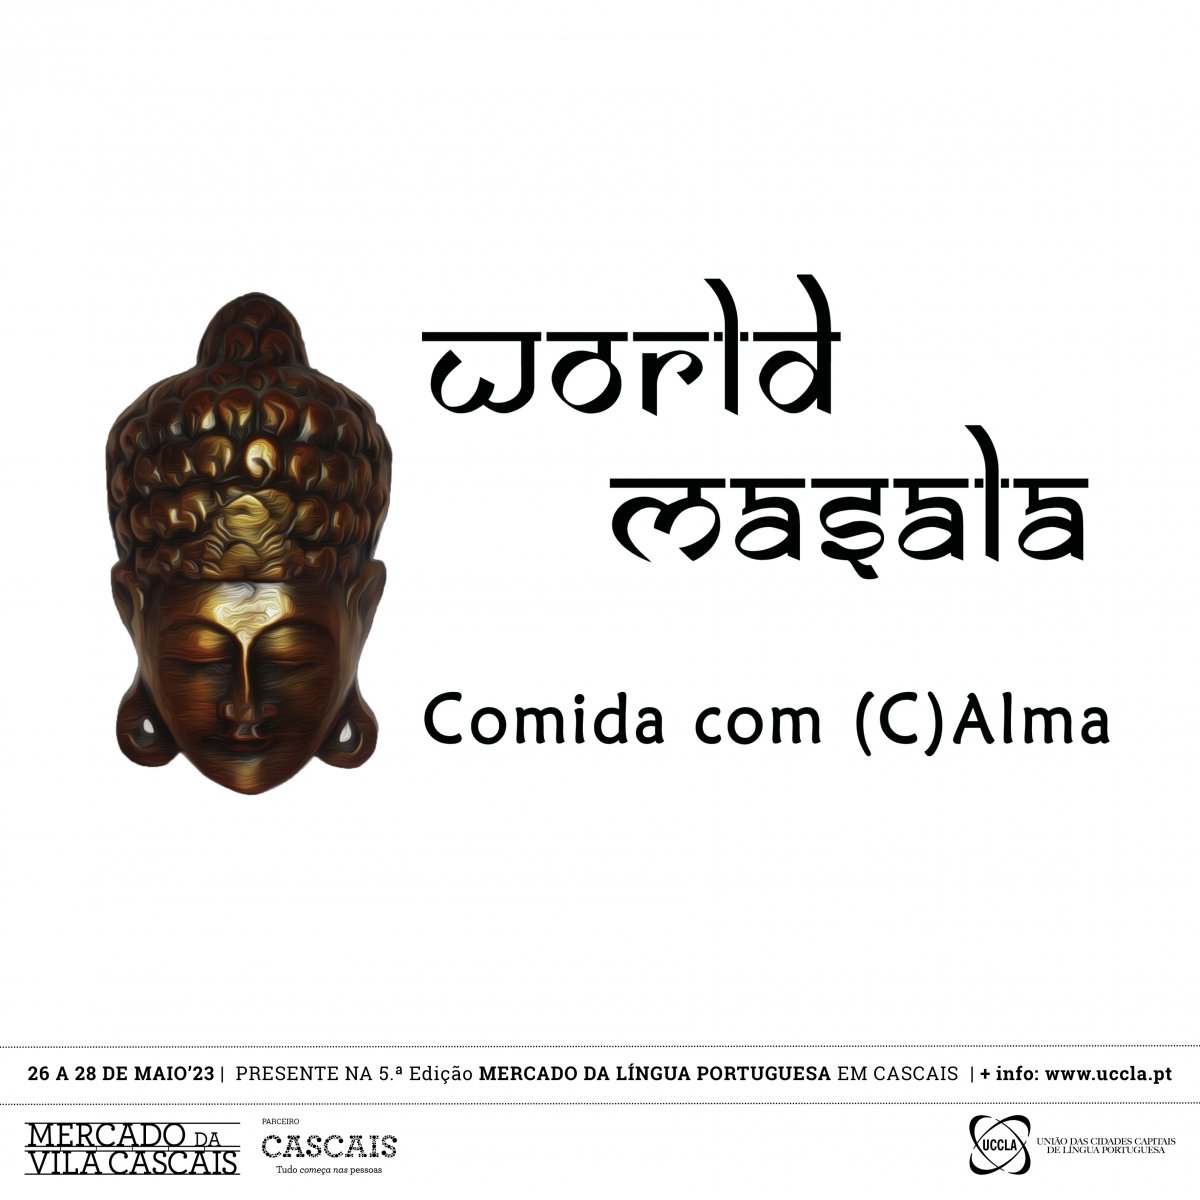 World Masala - Comida com ©Alma (Gastronomia)